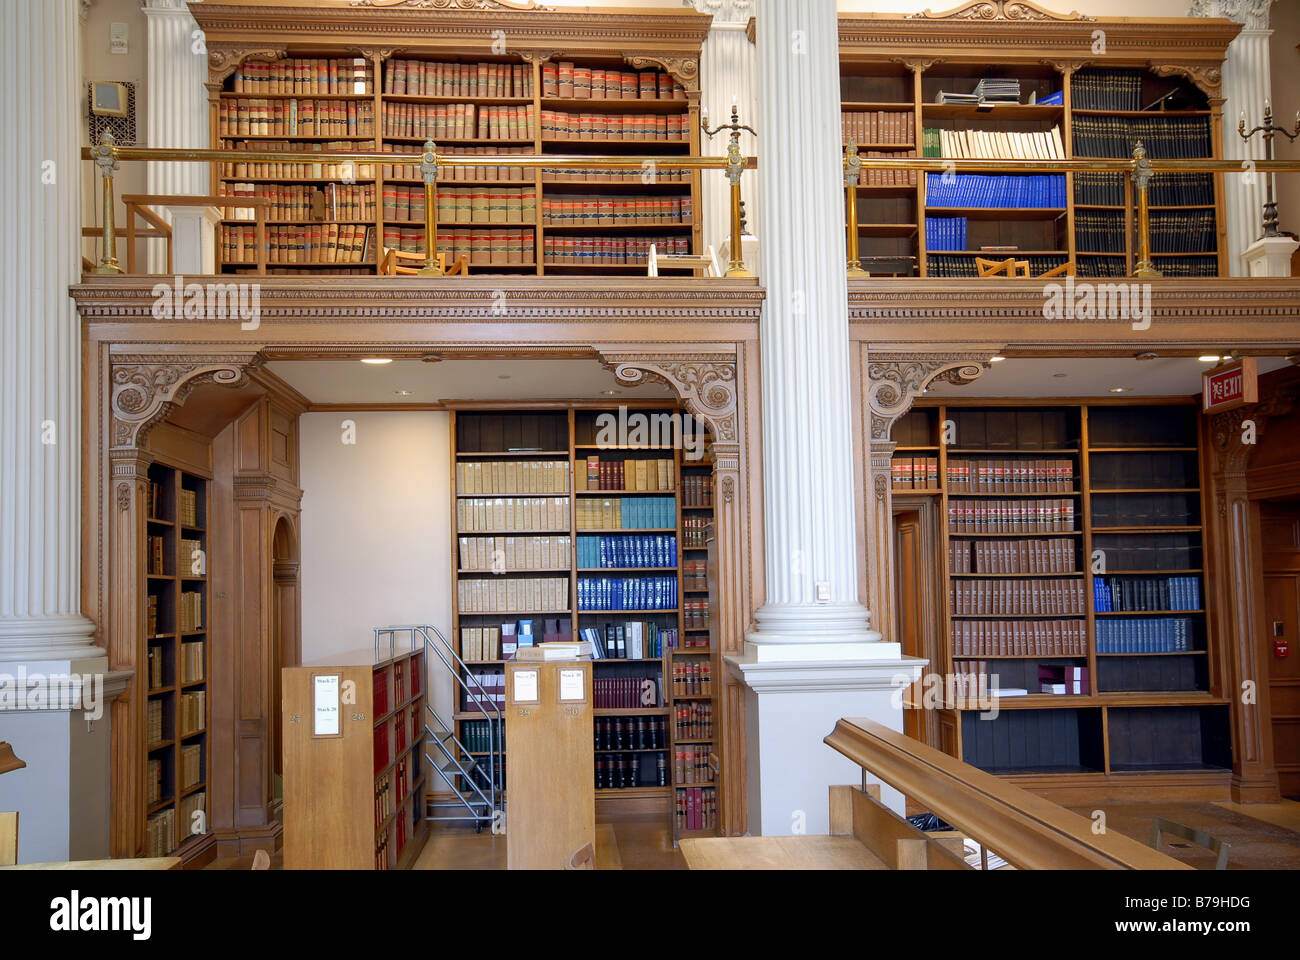 Bookshelves of law books Stock Photo - Alamy